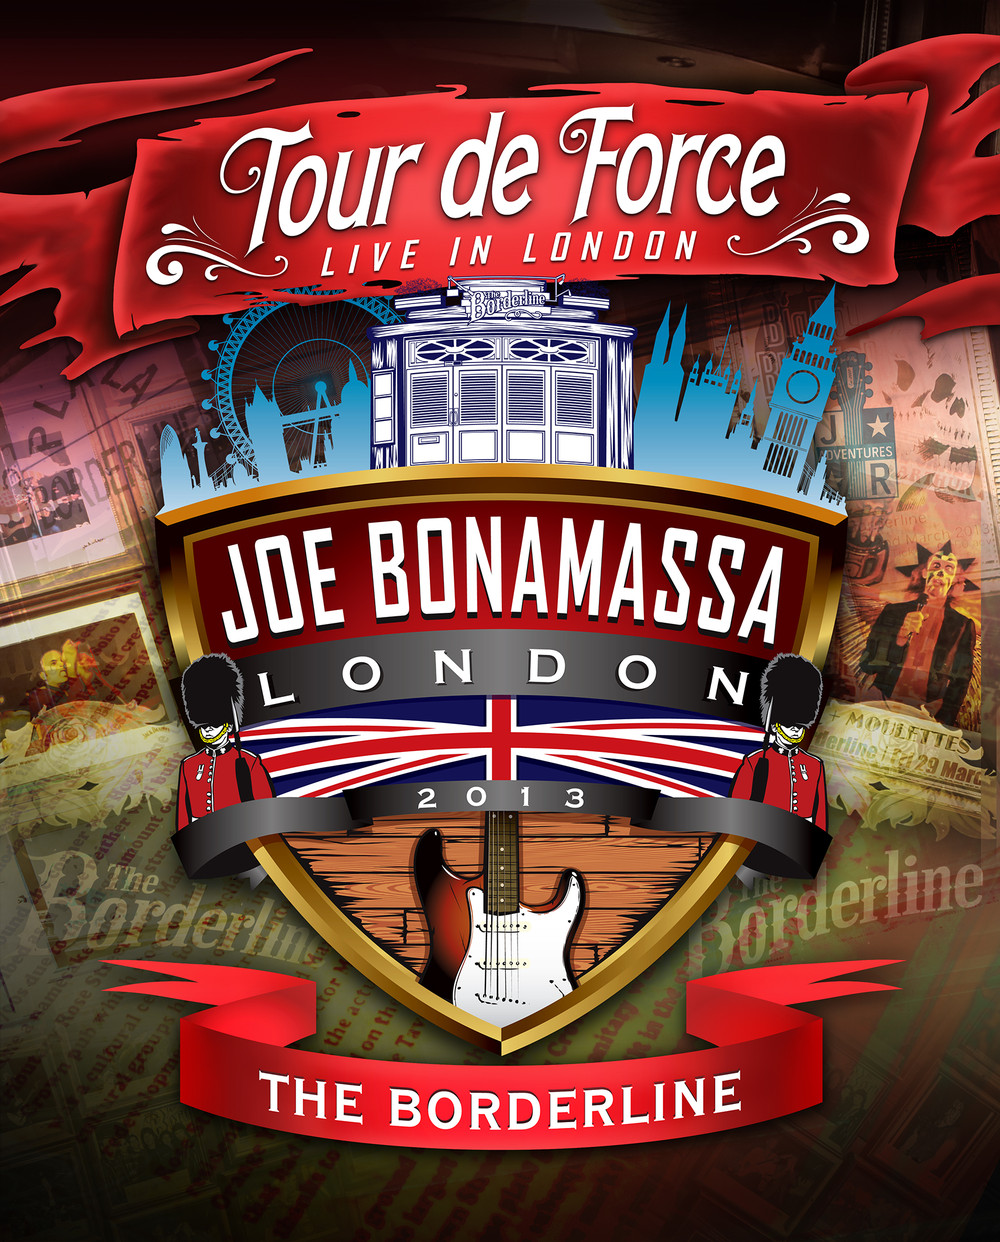 Bonamassa, Joe - The Borderline /Tour de Force, Live In London/   DVD cover